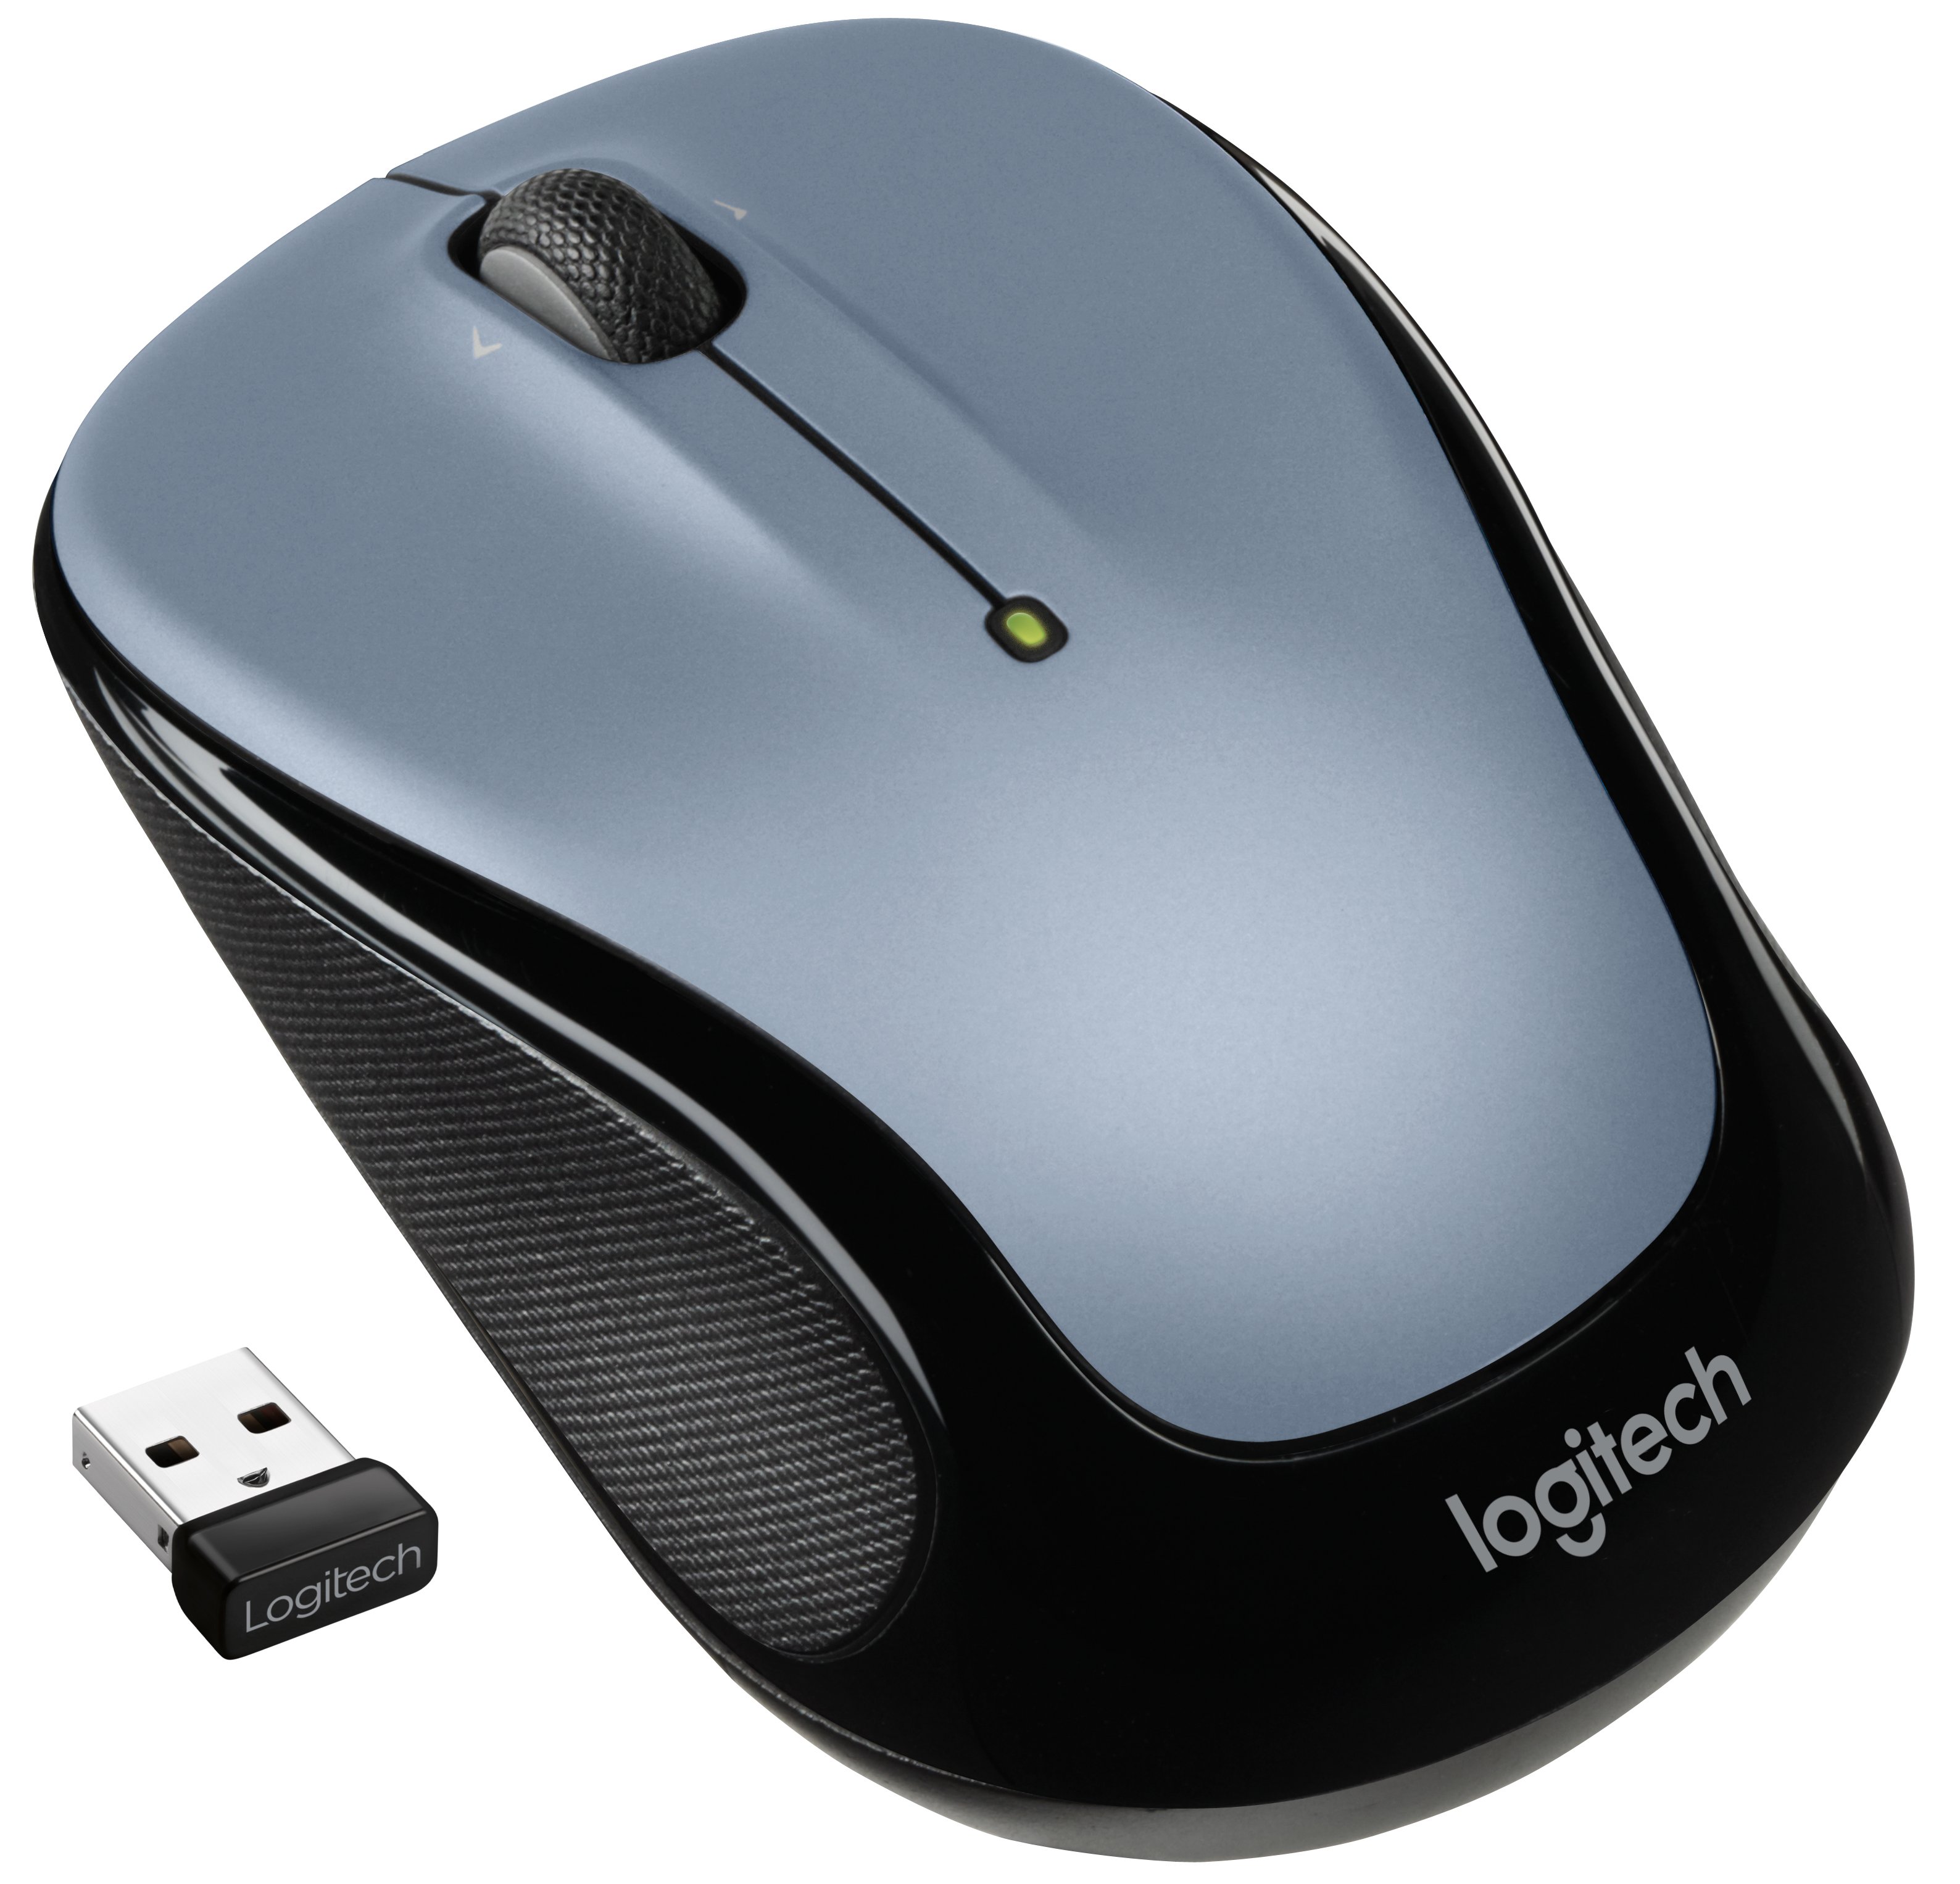 Logitech Mouse ZM325SG / 910-006813 Grey